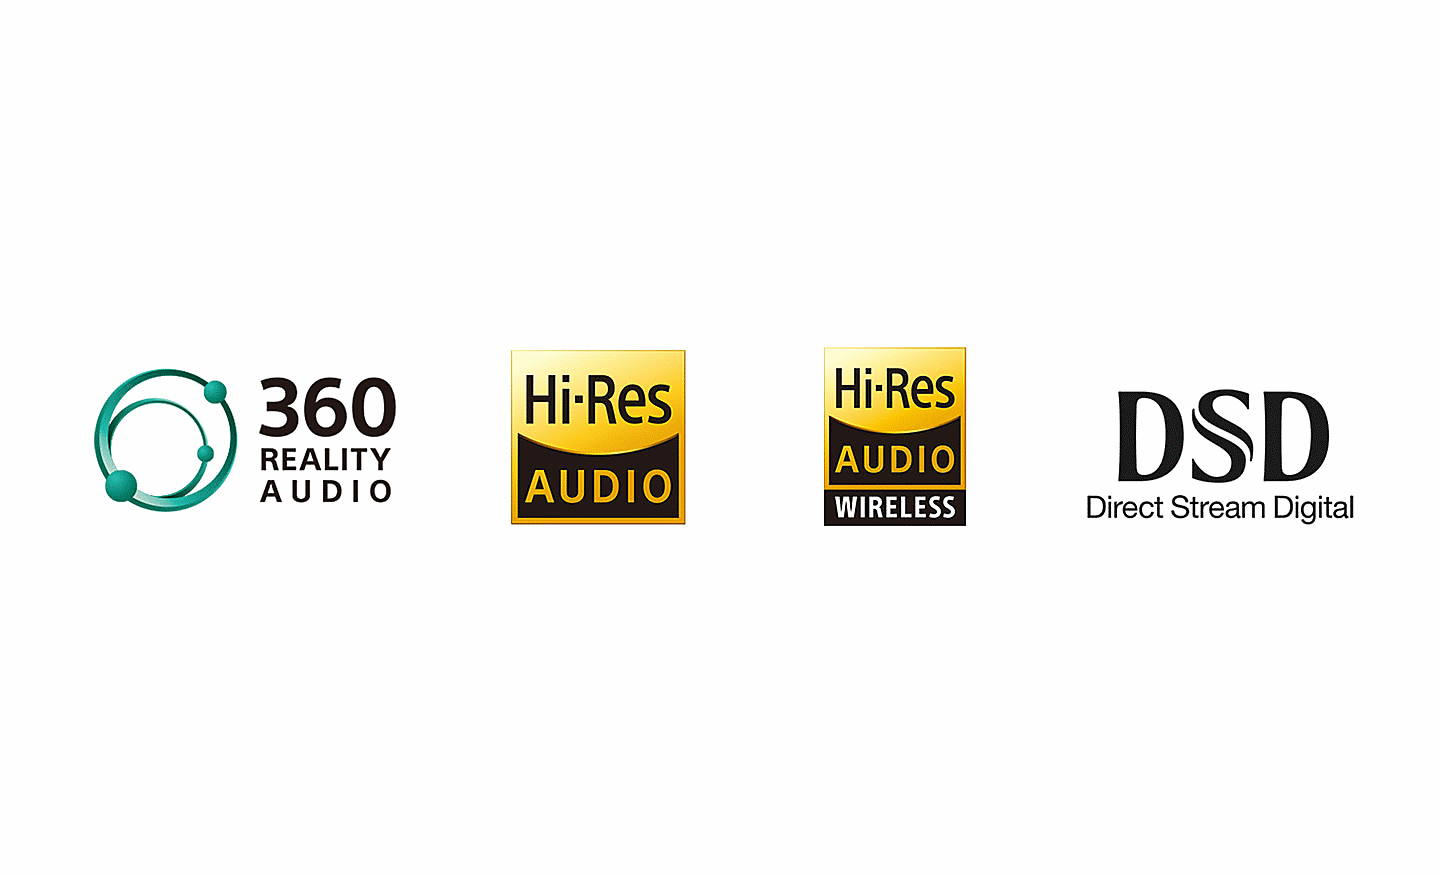 Logotip 360 Reality Audio, logotip Hi-Res Audio, logotip Hi-Res Audio Wireless, logotip DSD Direct Stream Digital